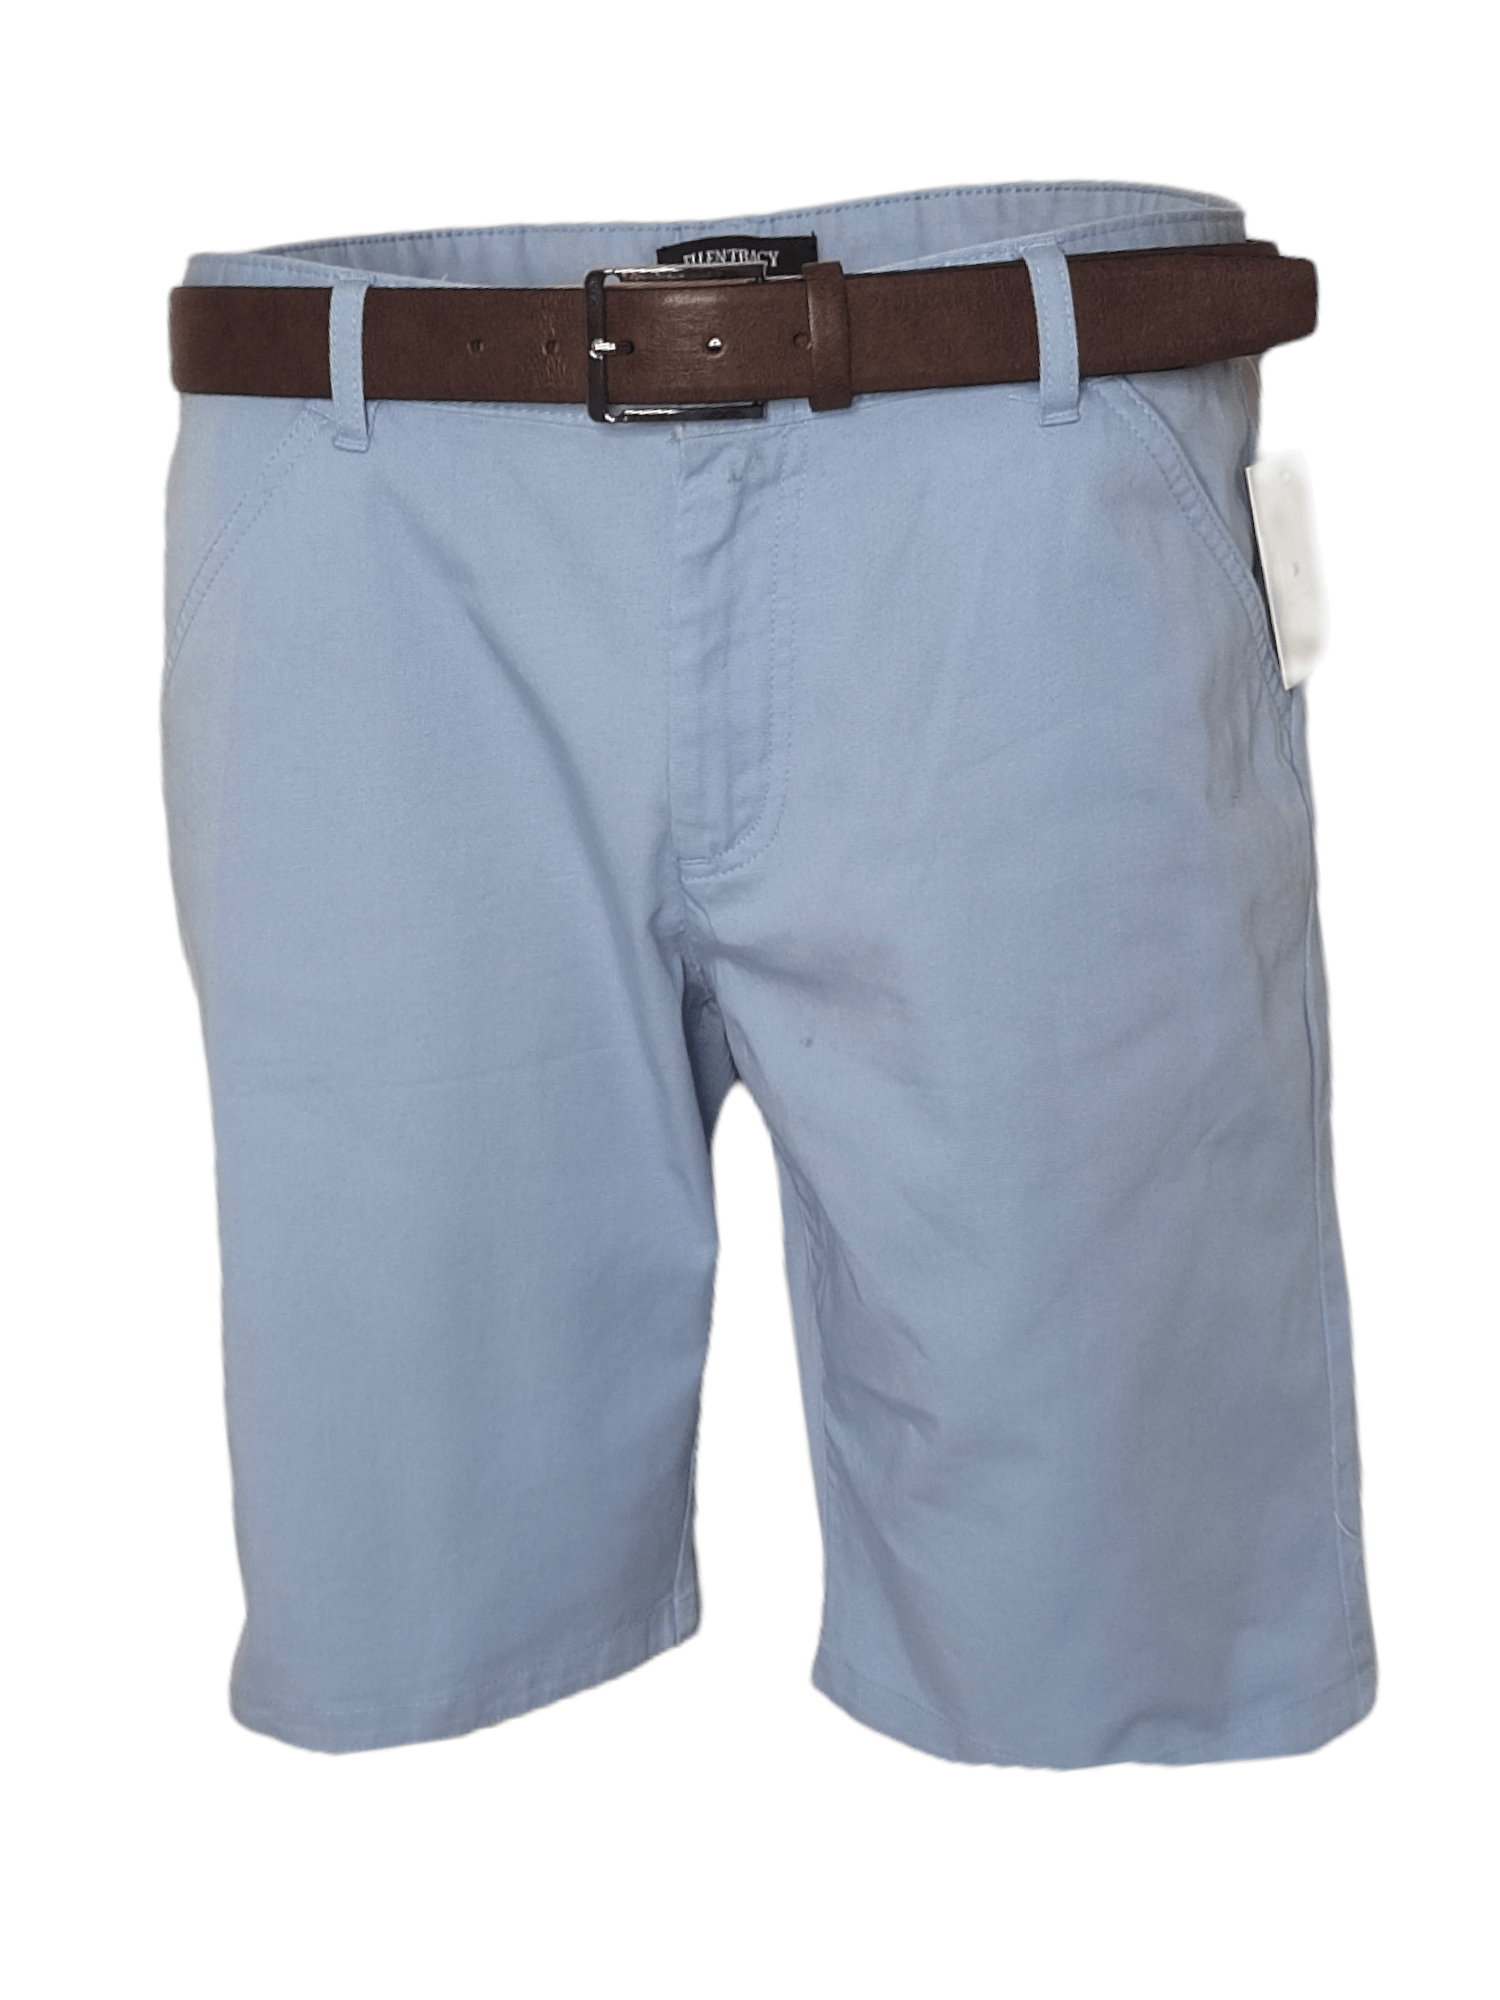 ElOutlet - Men Summer Men Shorts Men Shorts - Light Blue